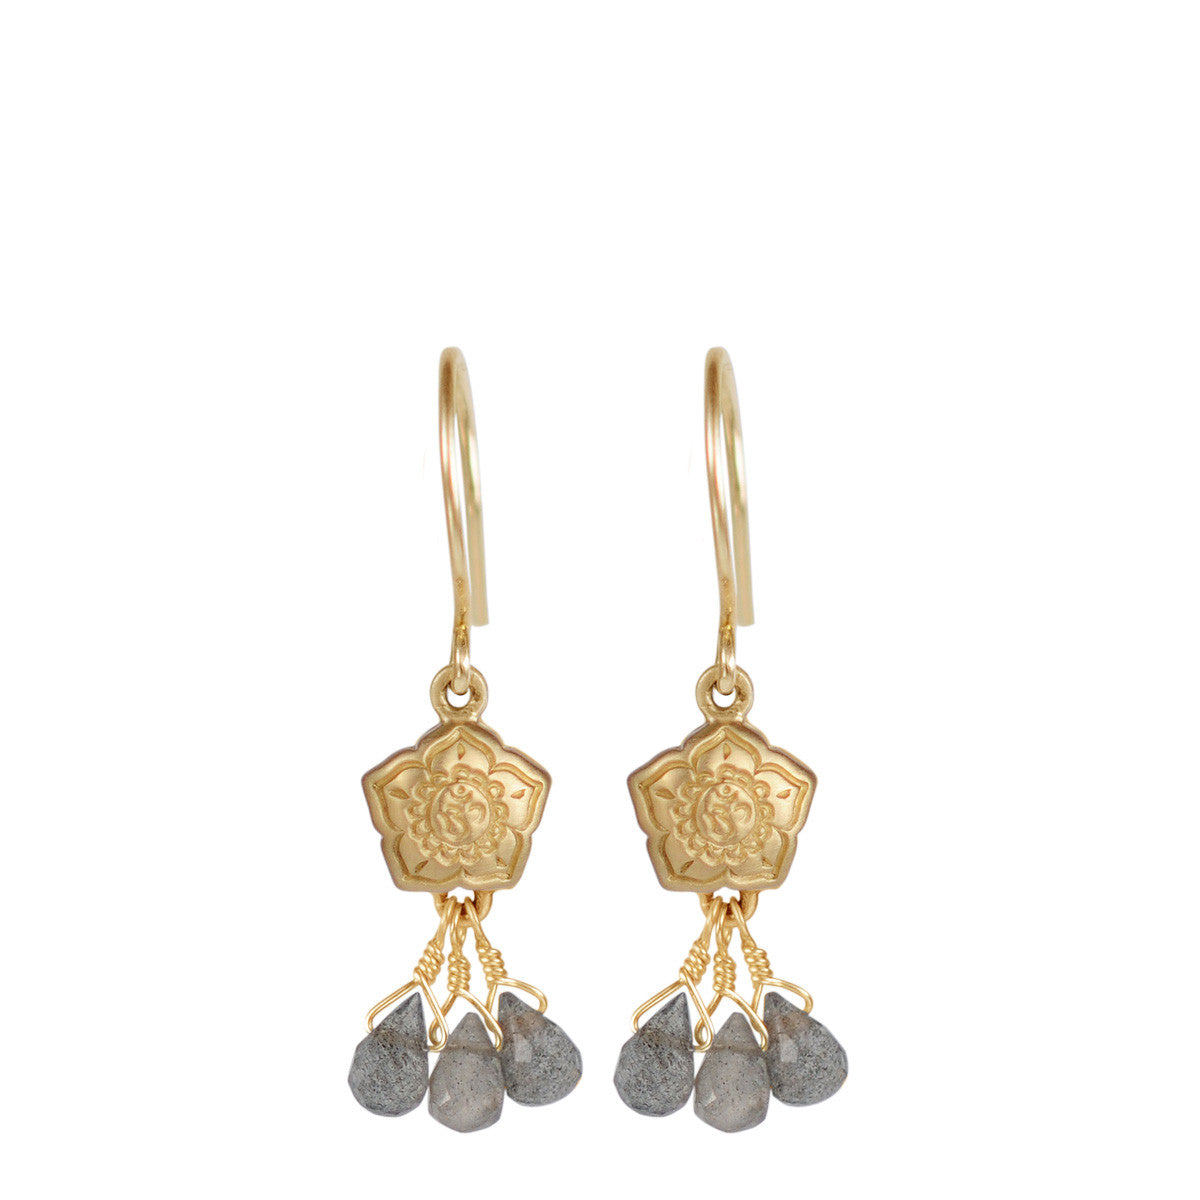 10K Gold Small Om Flower Earrings with Labradorite